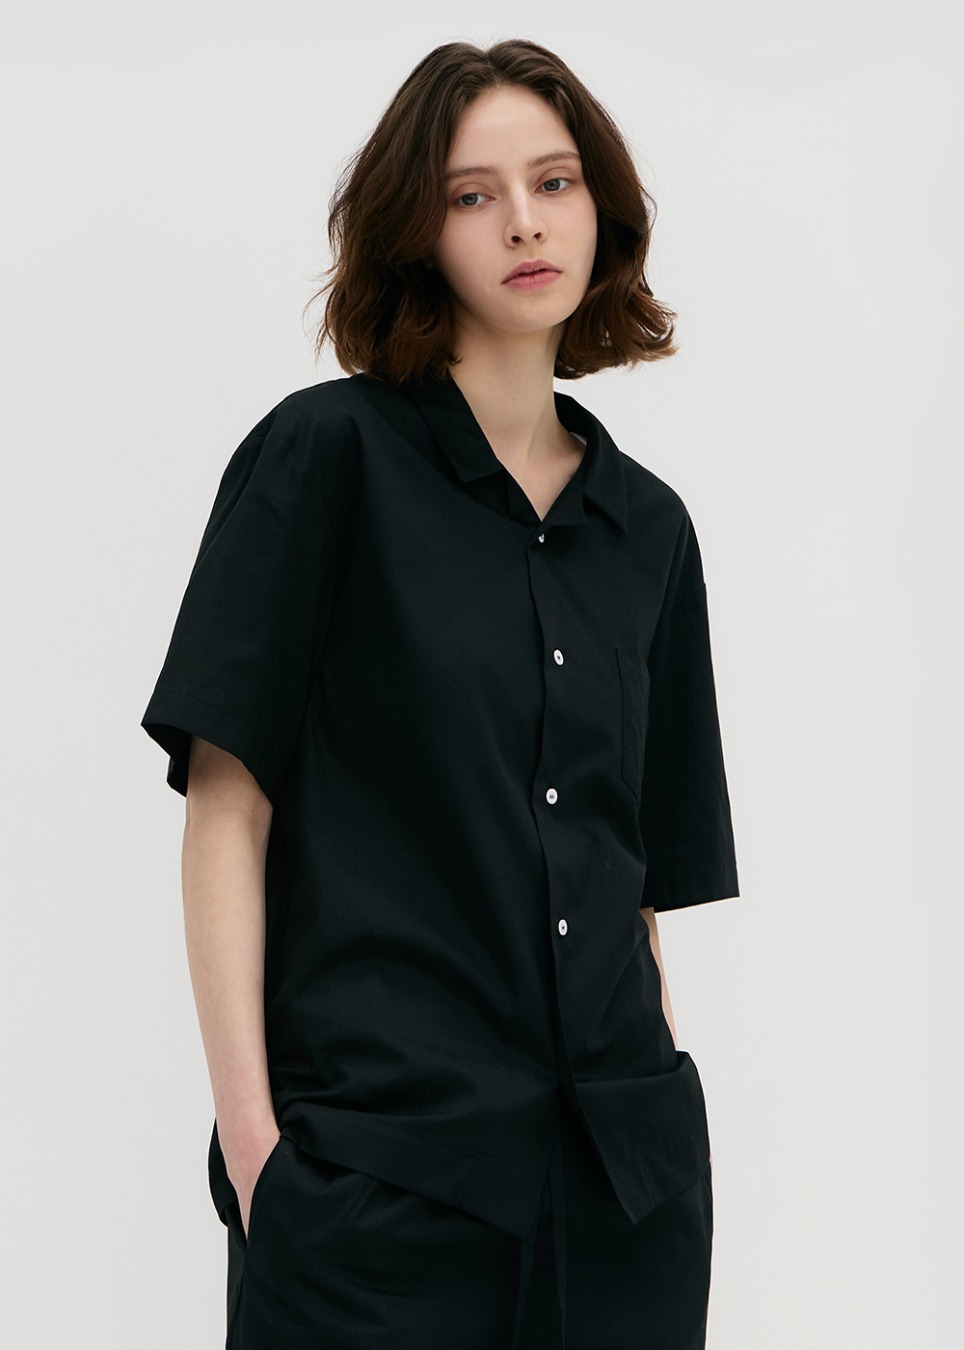 Stay Pajamas Short Sleeve Shirt - All Black